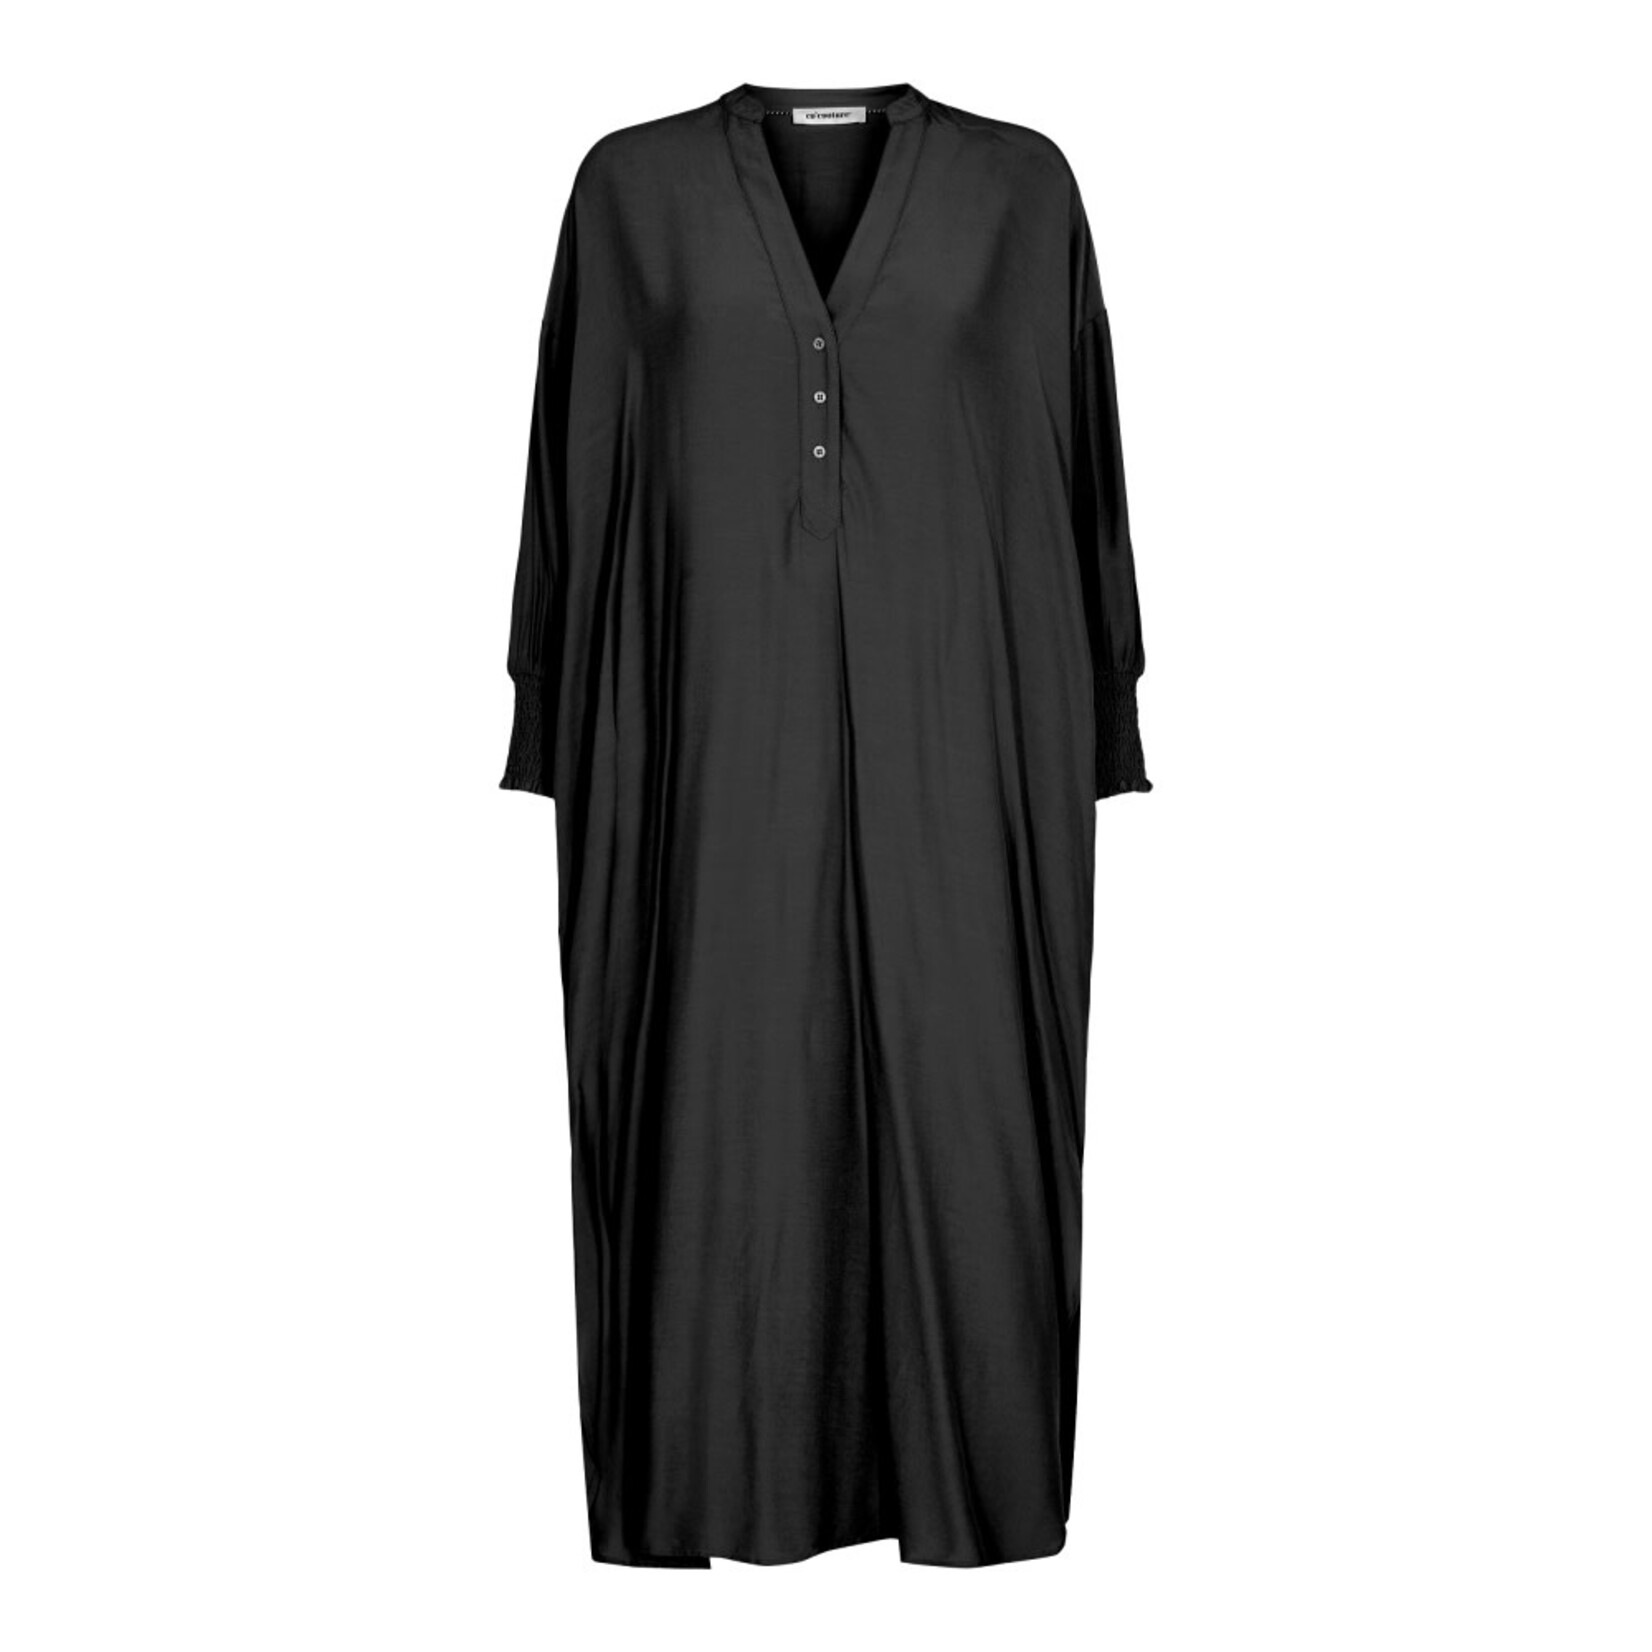 Co'couture Sunrise smock tunic dress